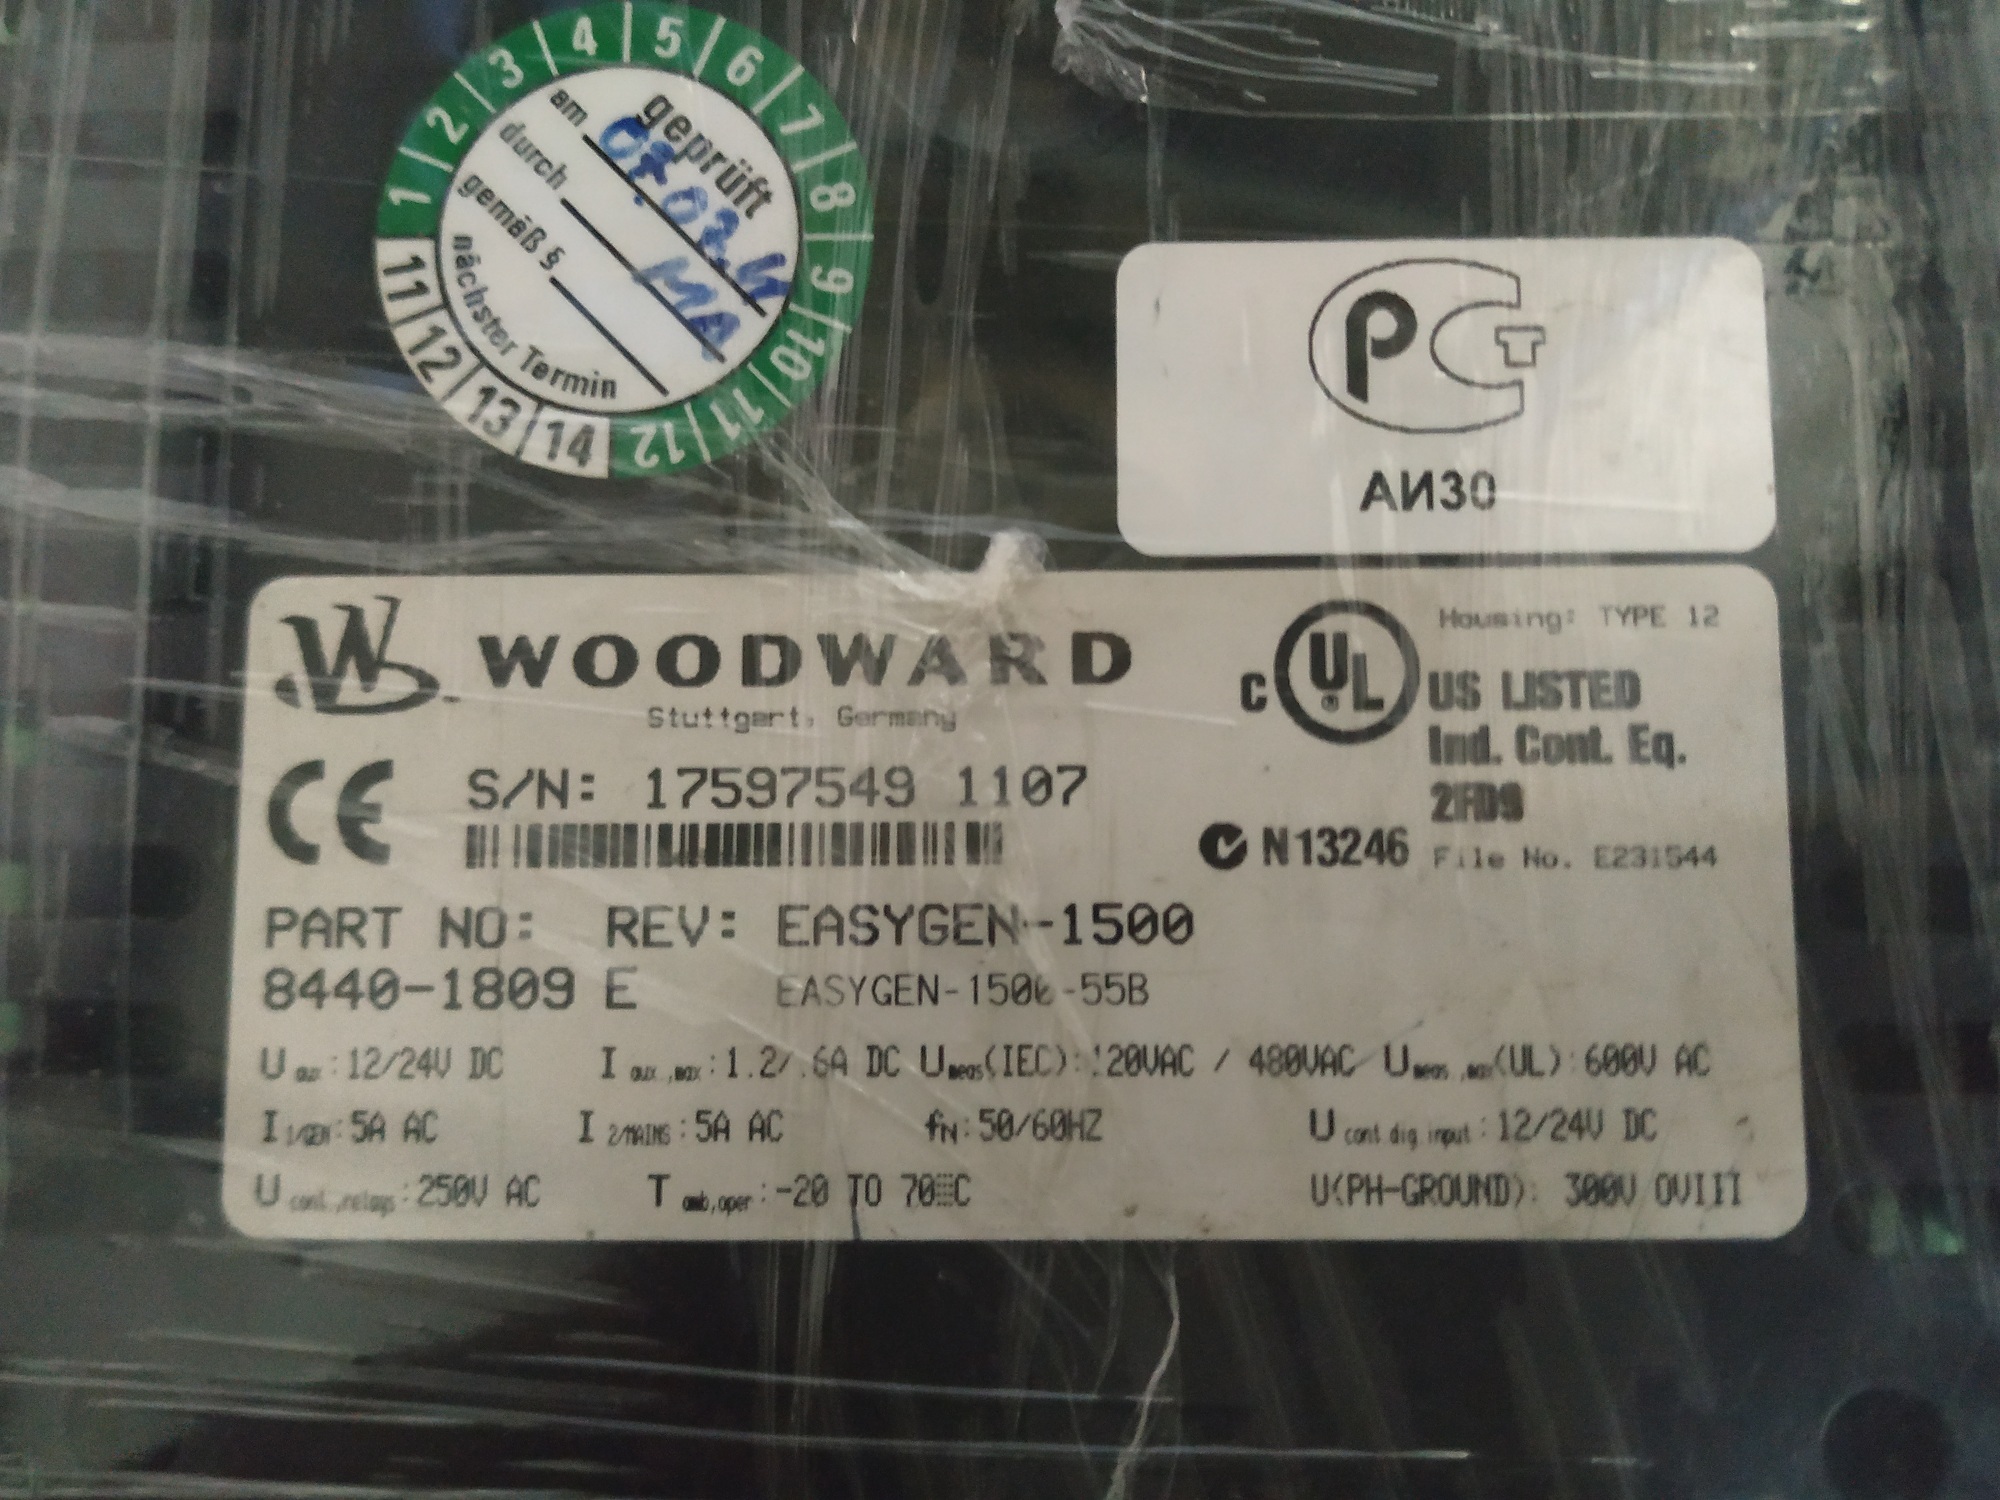 Woodward Hmi Controller Easygen -1500